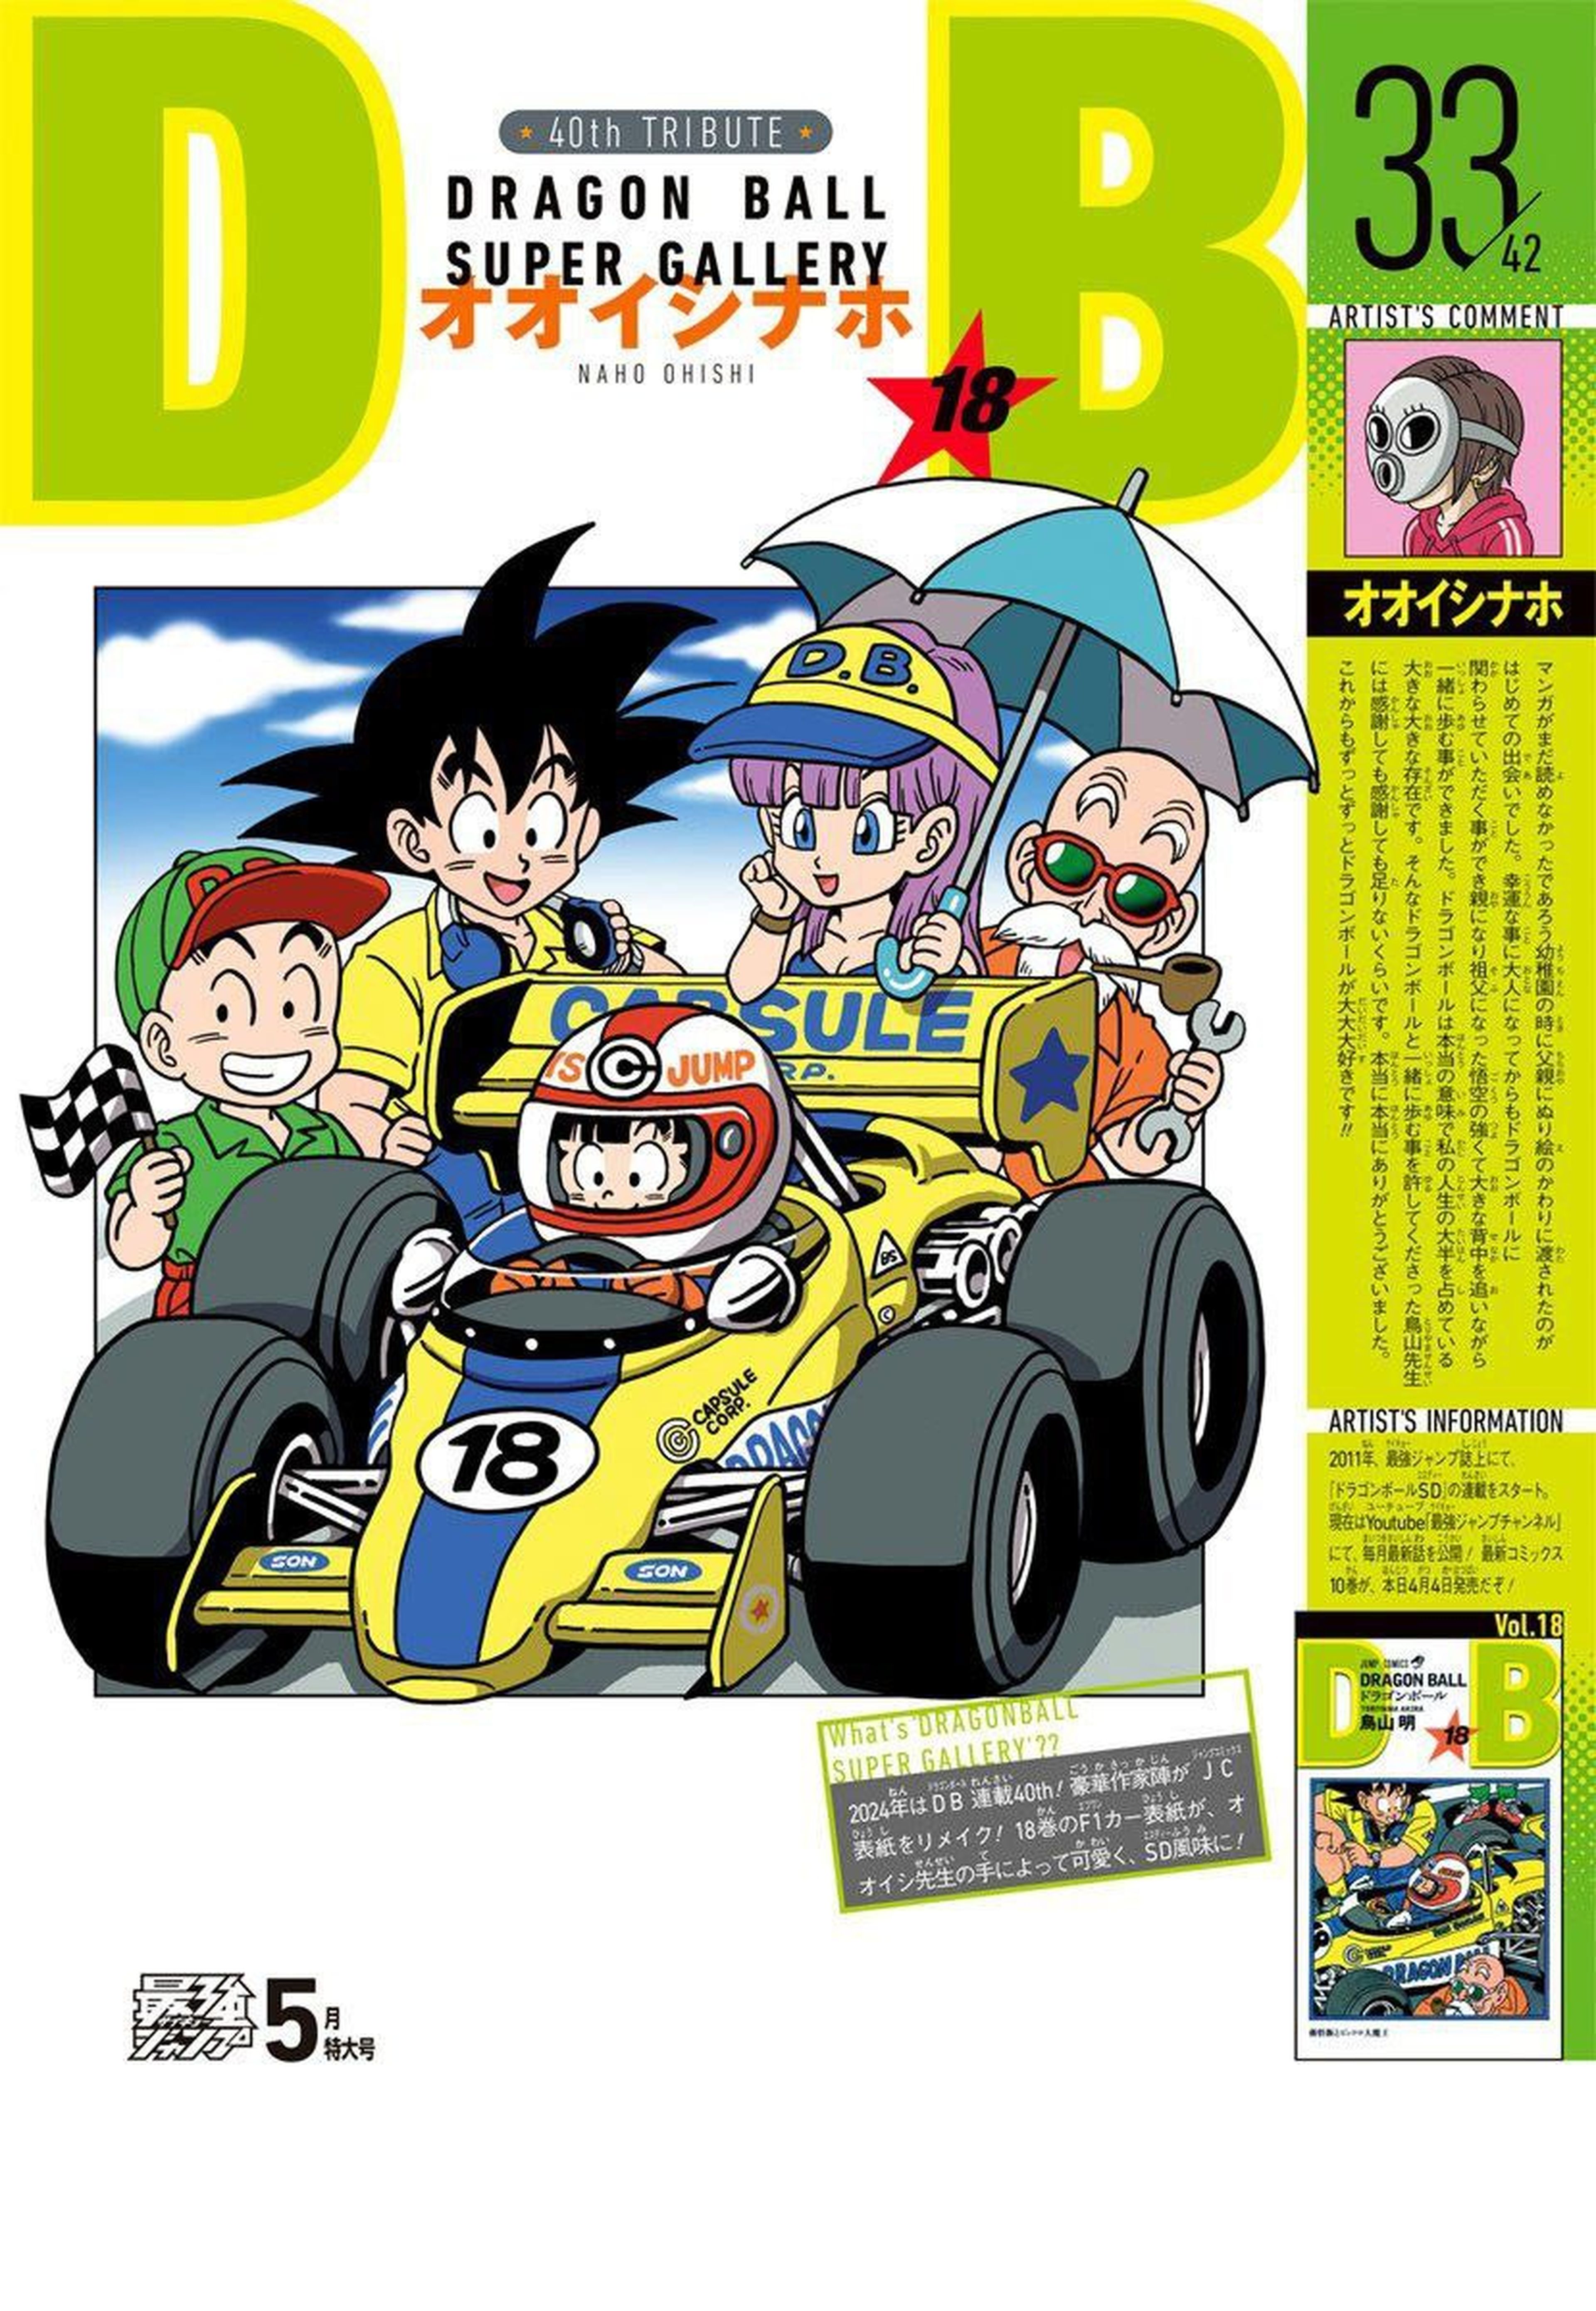 Naho Ohishi, la primera discípula de Akira Toriyama, recrea una portada de su maestro para la serie original de Dragon Ball